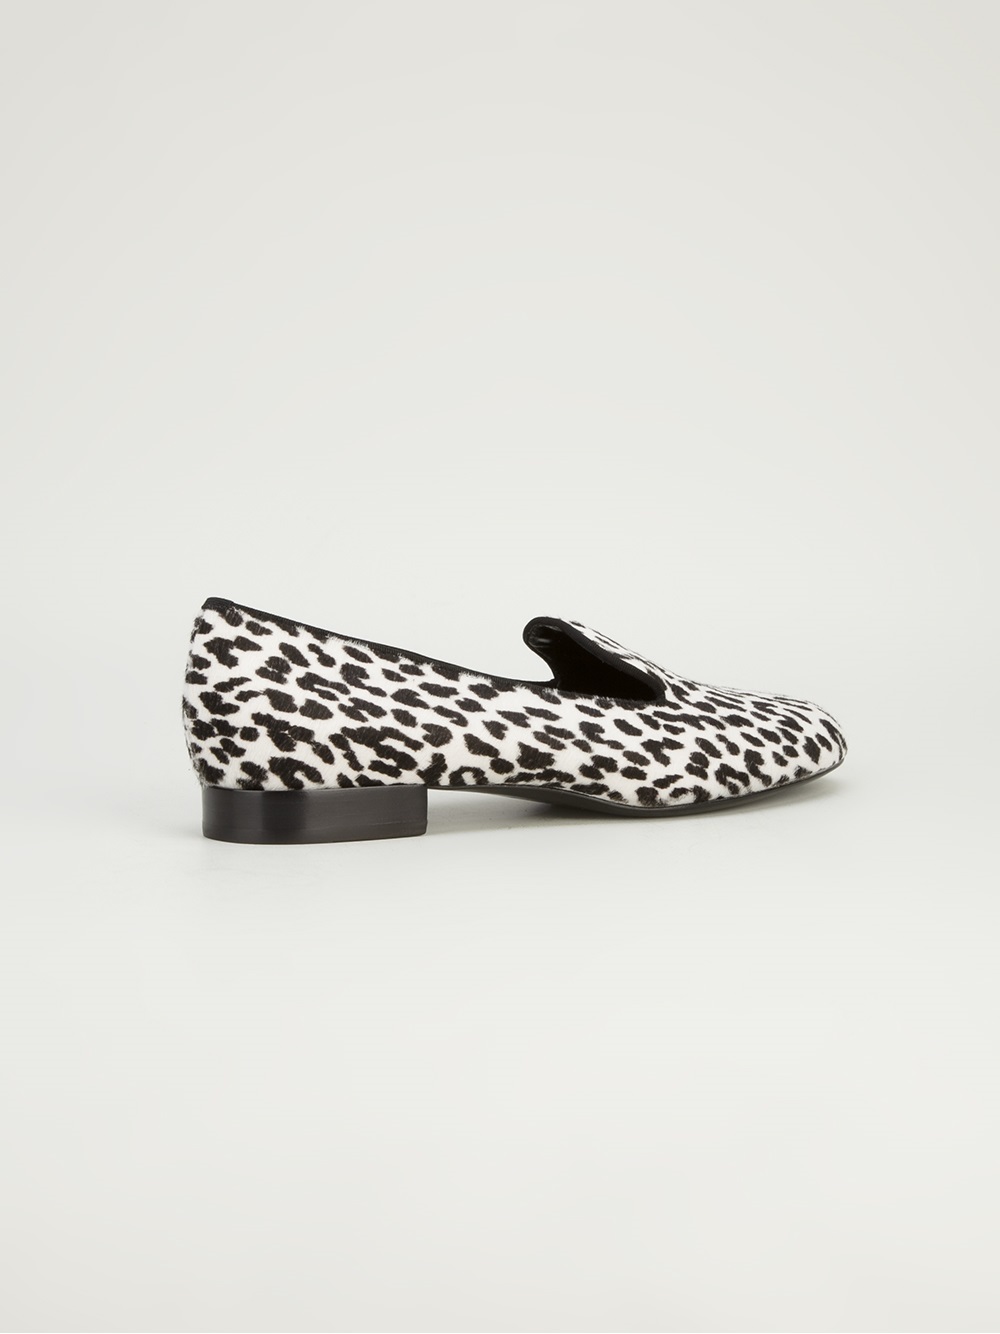 Saint Laurent Leopard Print Loafer in White - Lyst